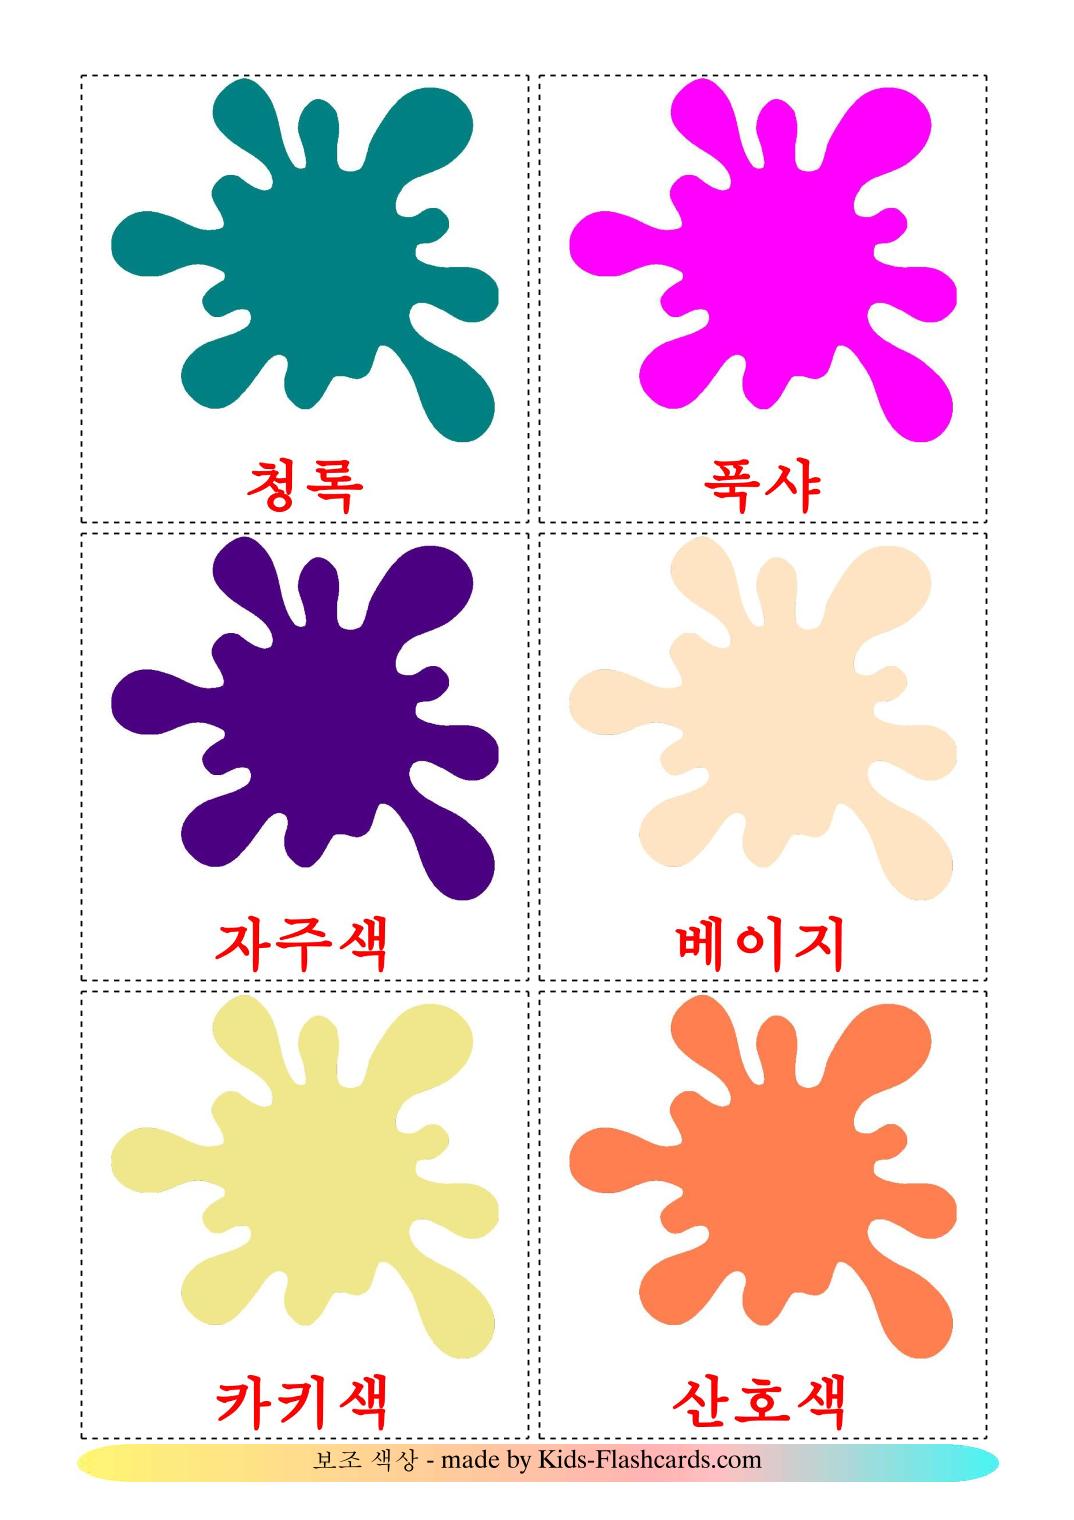 Colores secundarios - 20 fichas de coreano para imprimir gratis 